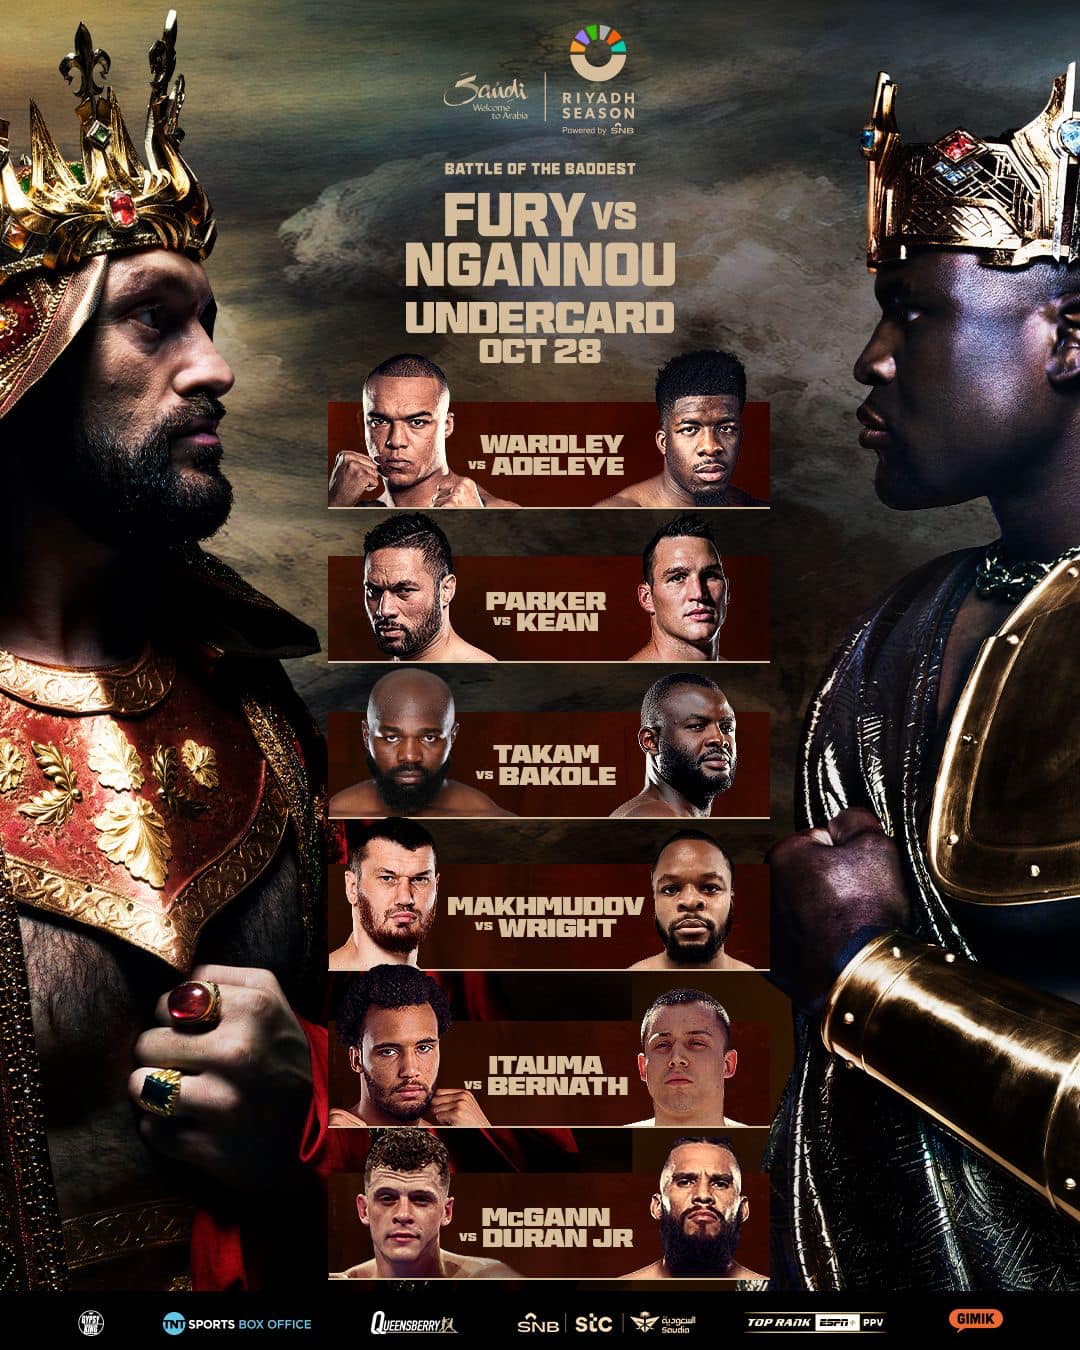 Fury vs Ngannou fightcard